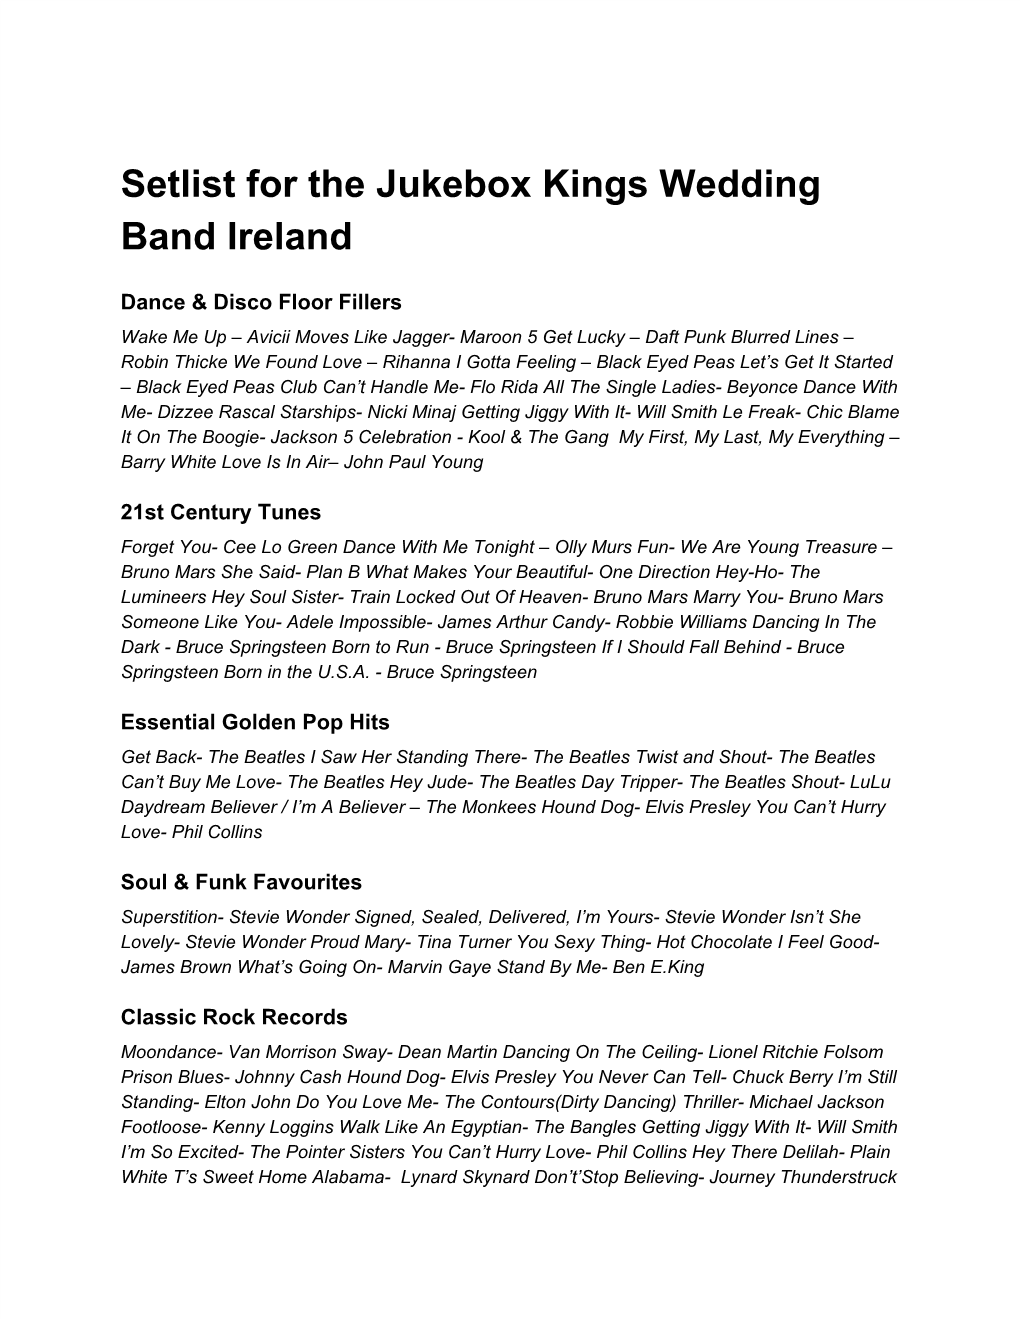 Setlist for the Jukebox Kings Wedding Band Ireland